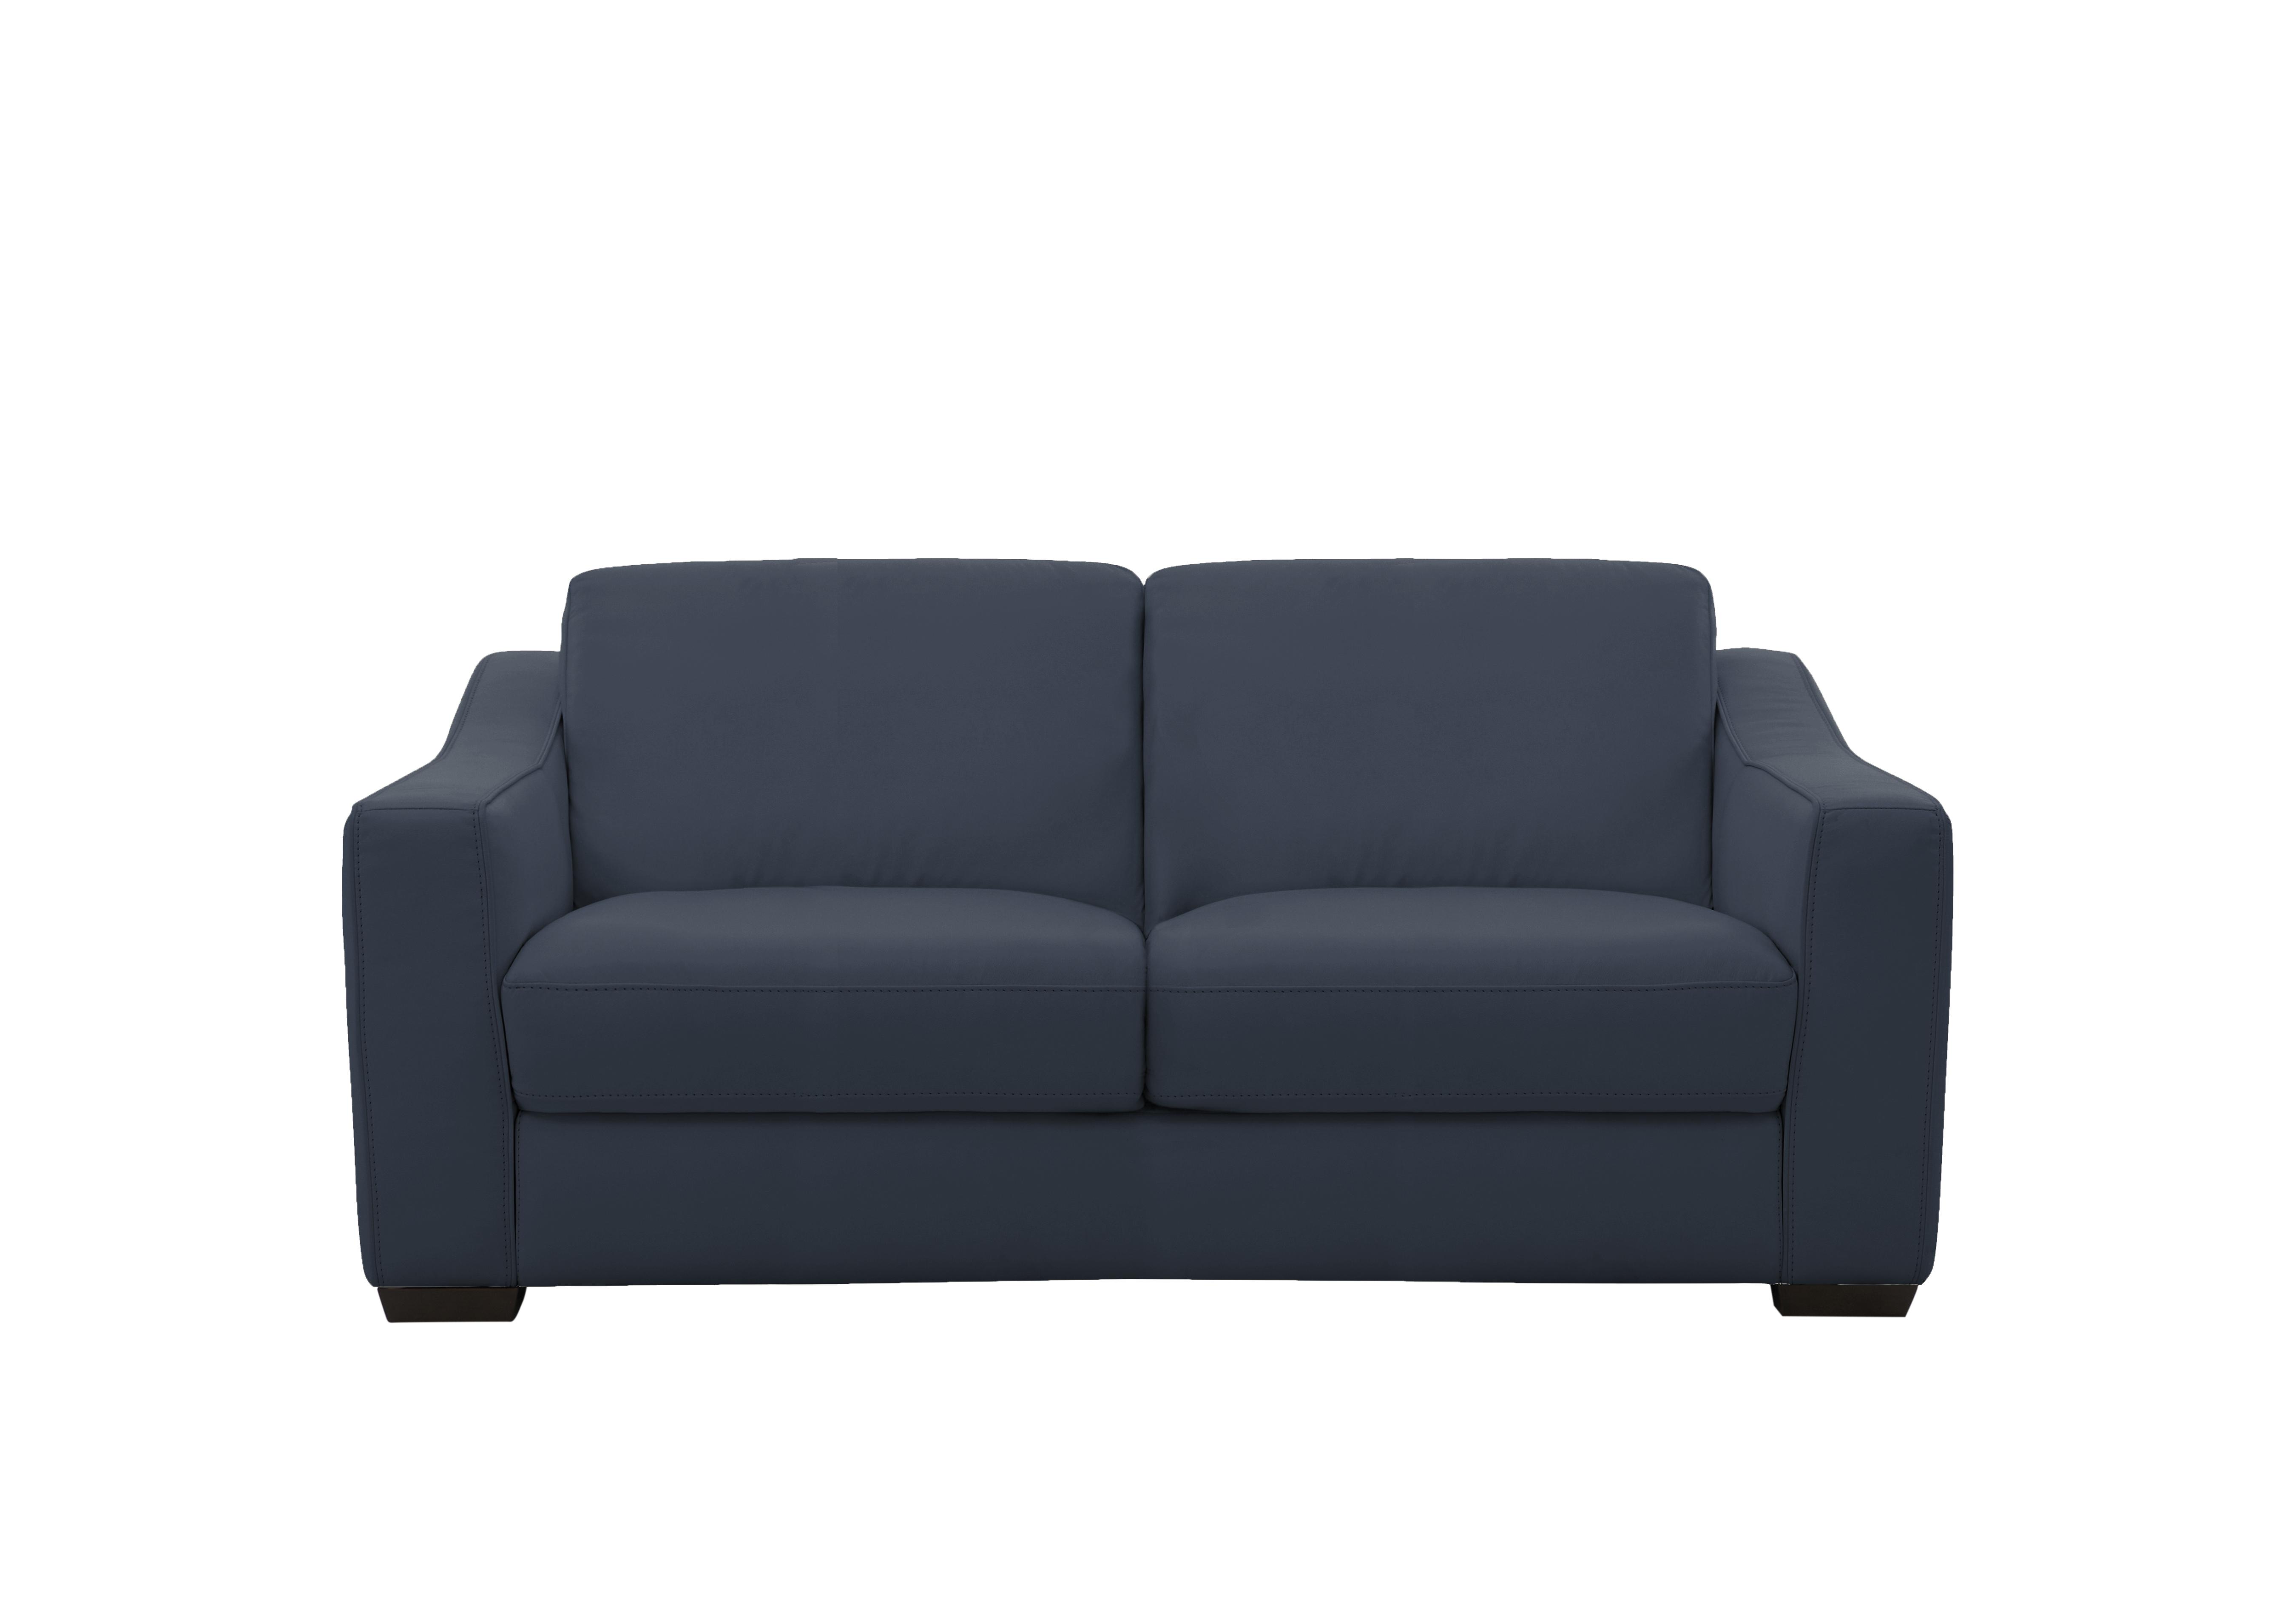 Optimus 2 Seater Leather Sofa in Bv-313e Ocean Blue on Furniture Village